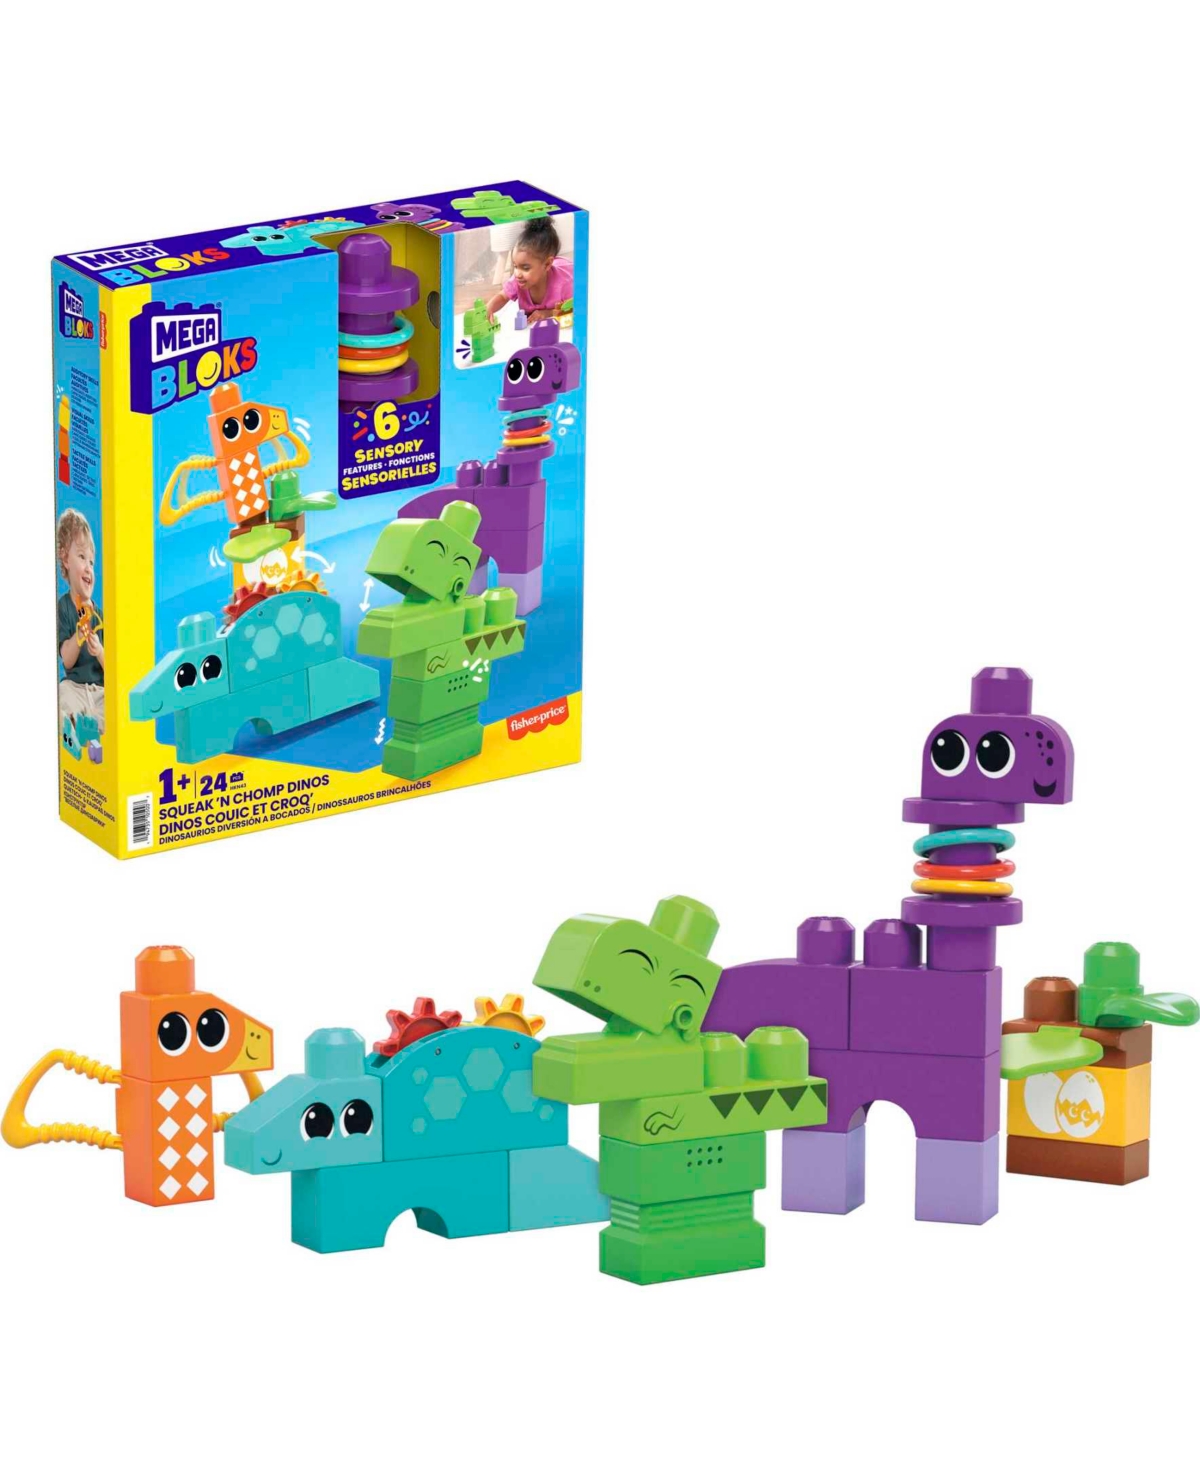 Mega Bloks Kids' Fisher Price Sensory Toy Blocks Squeak And Chomp Dinos Set In Multi-color